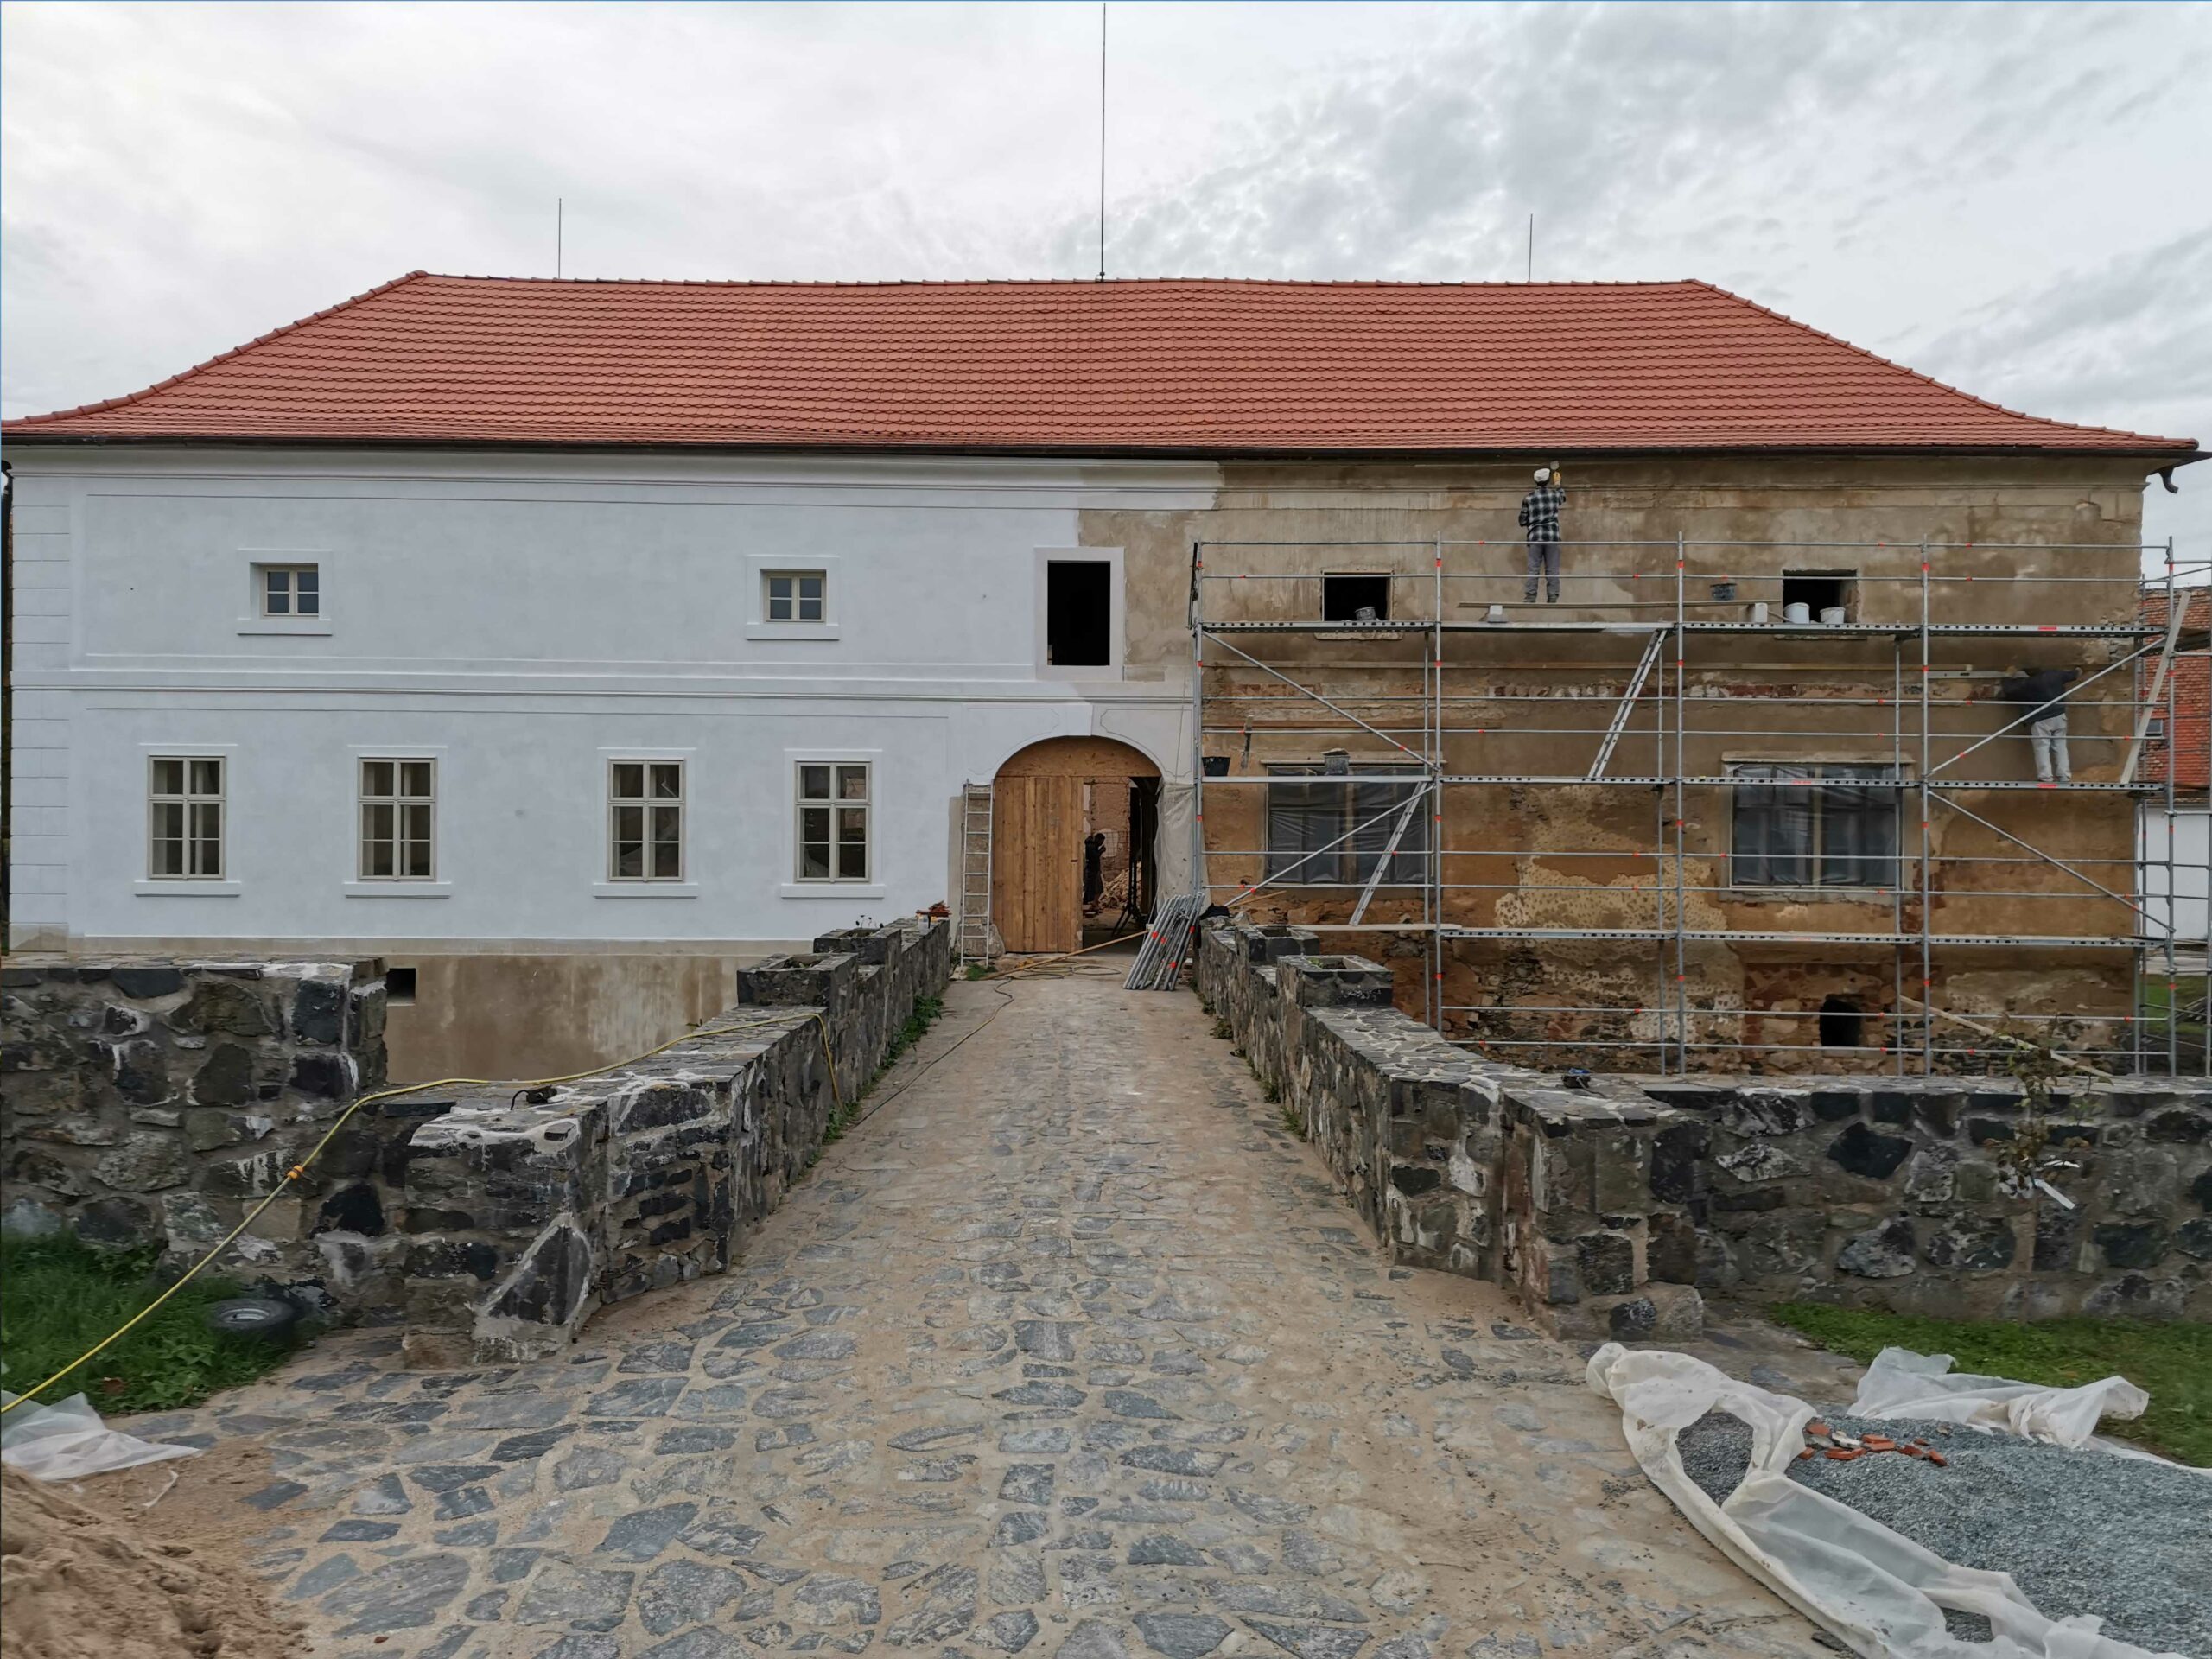 Pakomericky-zamek-po-rekonstrukci – obnovený